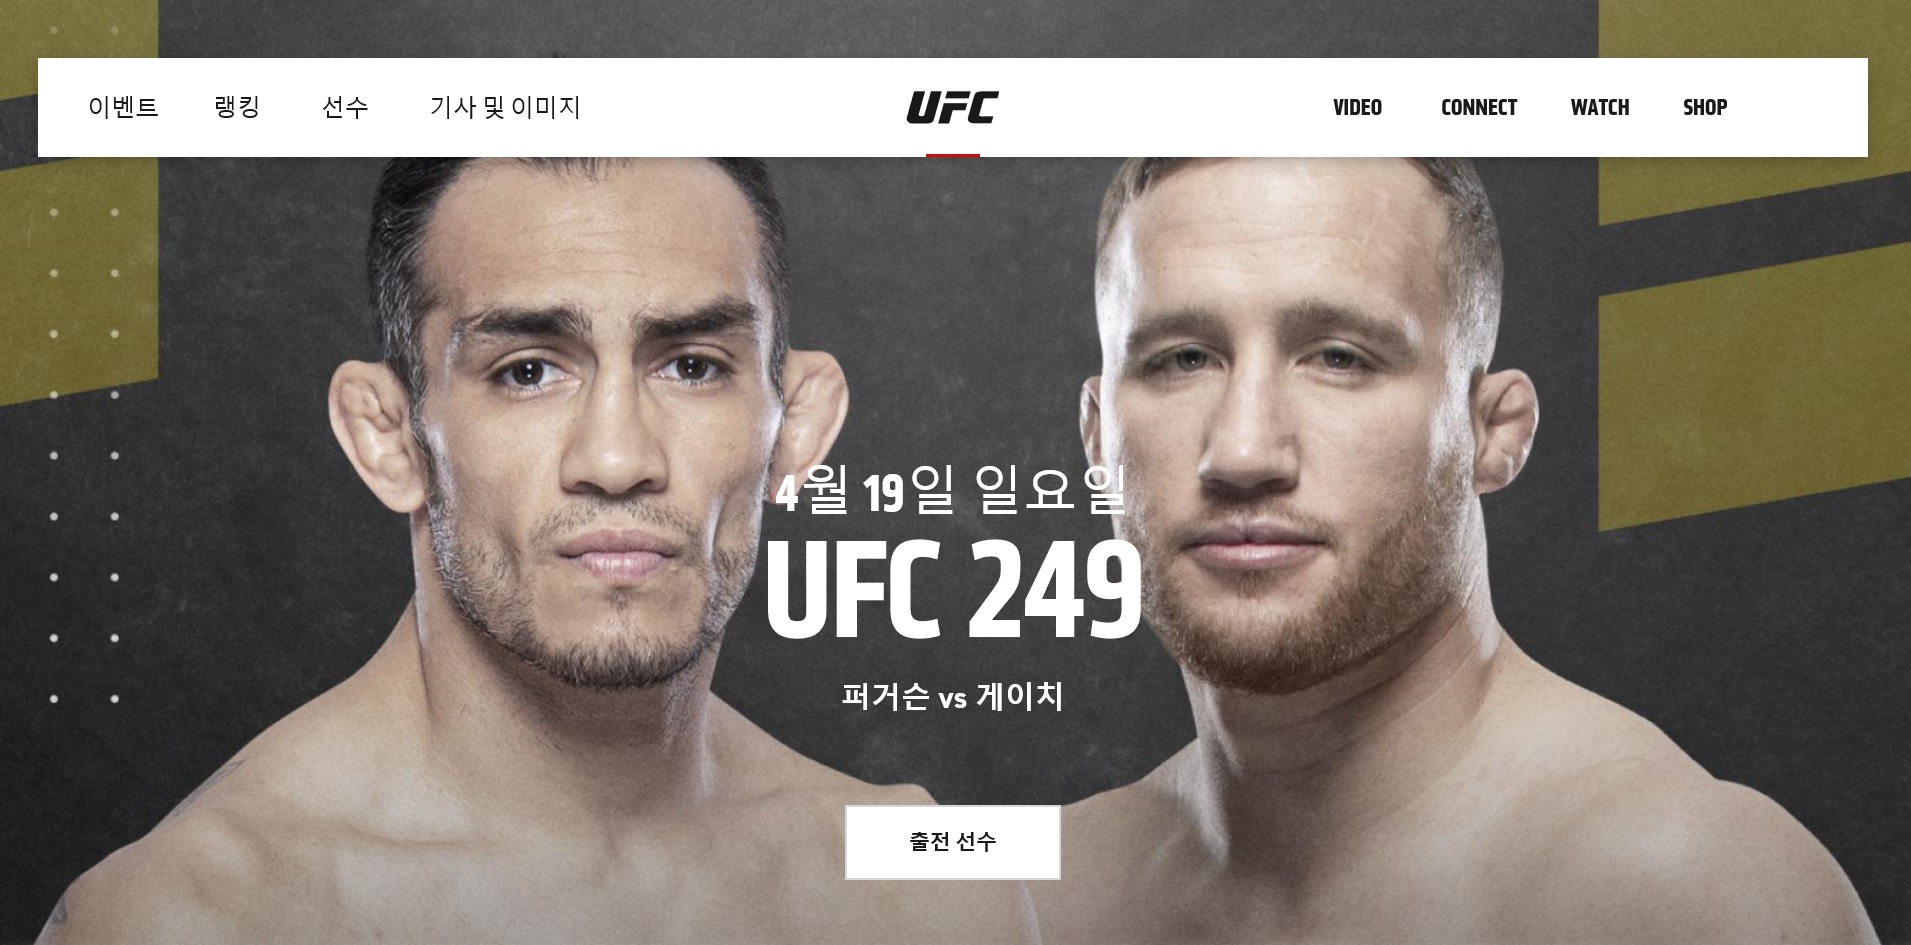 UFC249의 새로운 대진을 알리는 UFC 홈페이지. UFC 홈페이지 캡처